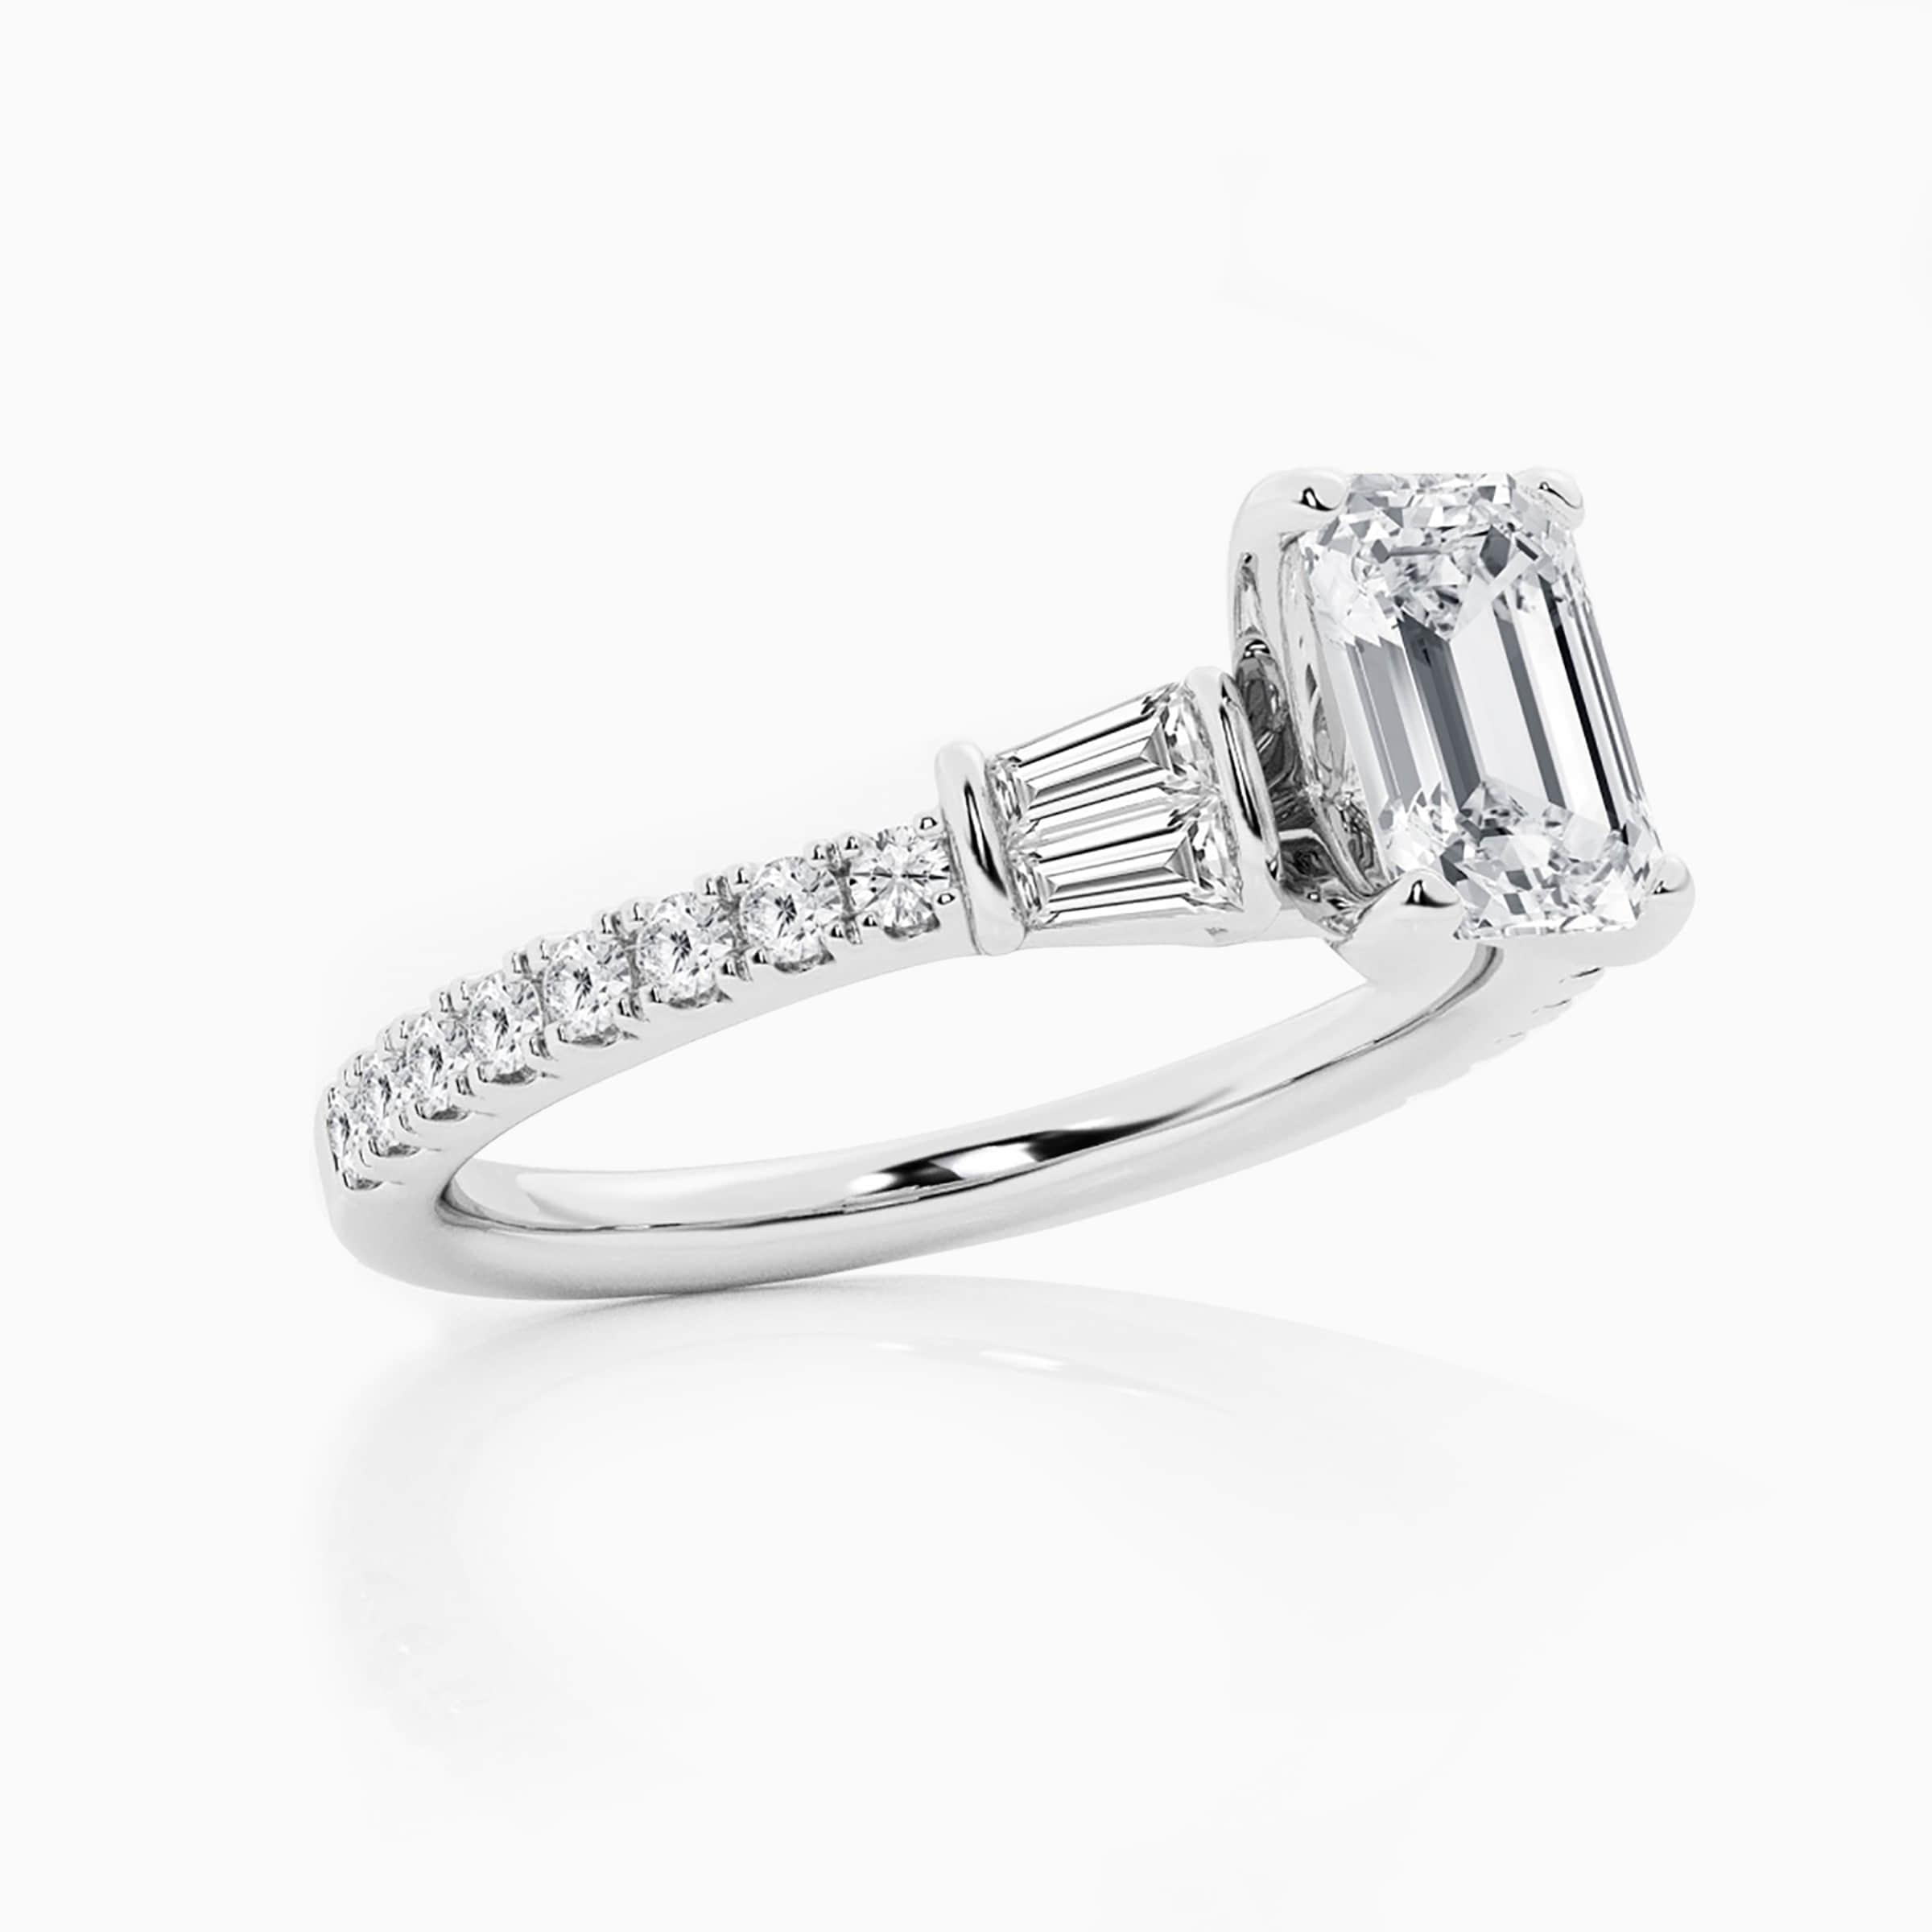 Darry Ring emerald cut three stone engagement ring in platinum